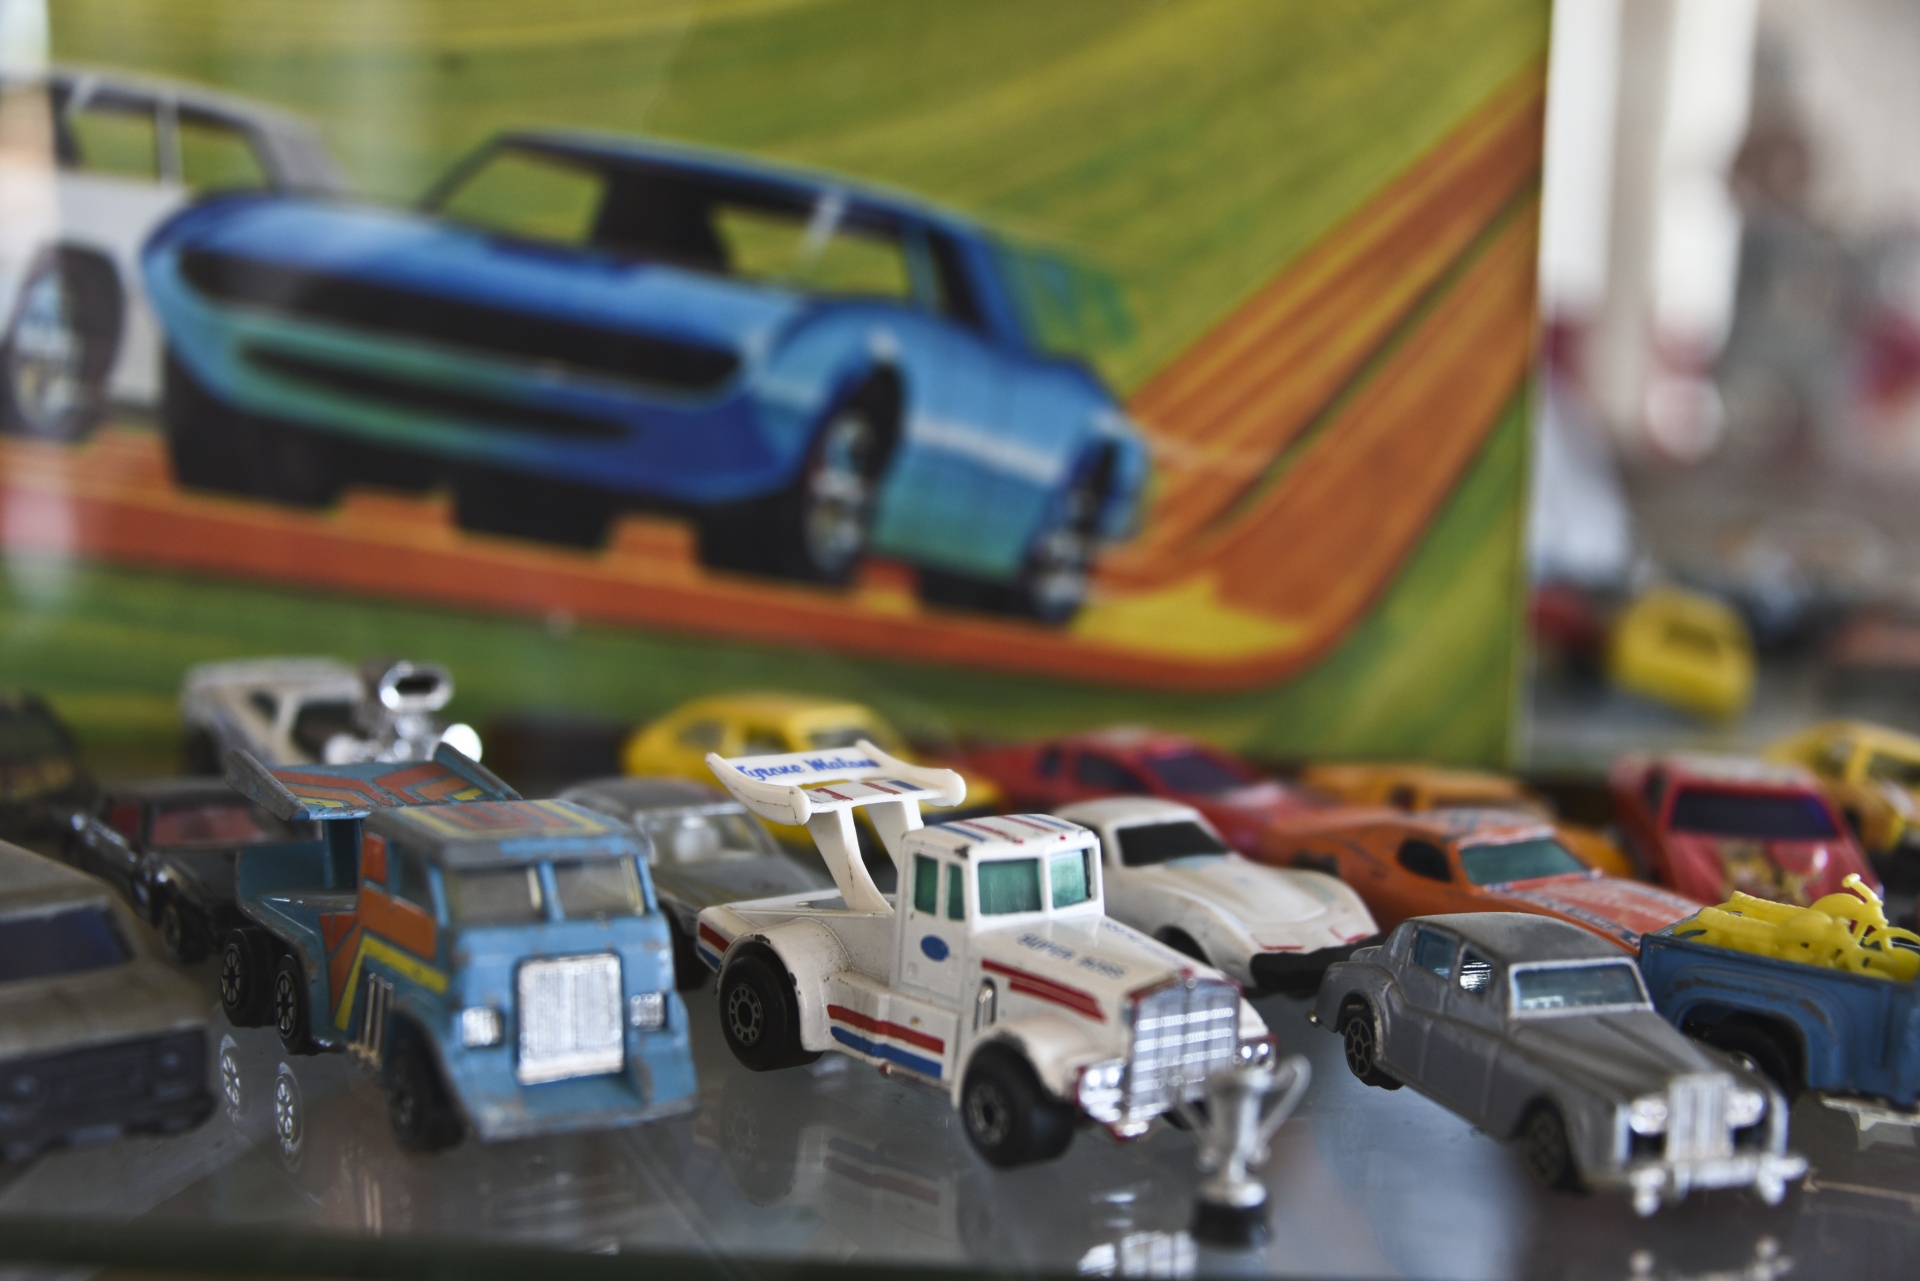 matchbox toys cars free photo